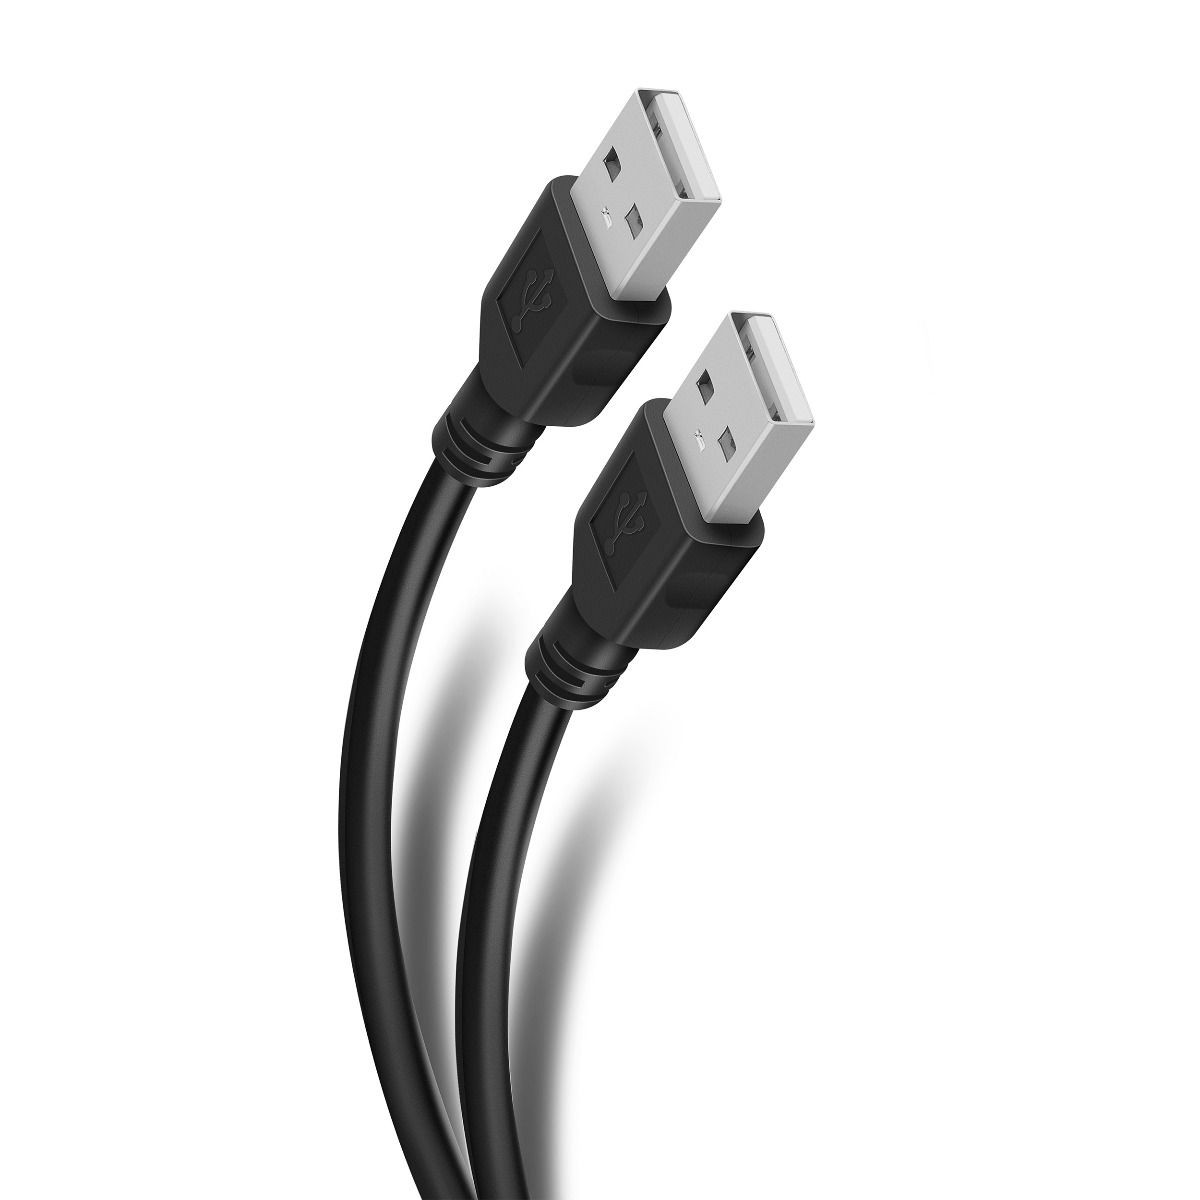 Cable USB a USB de 1,8 m con conectores niquelados. Ste